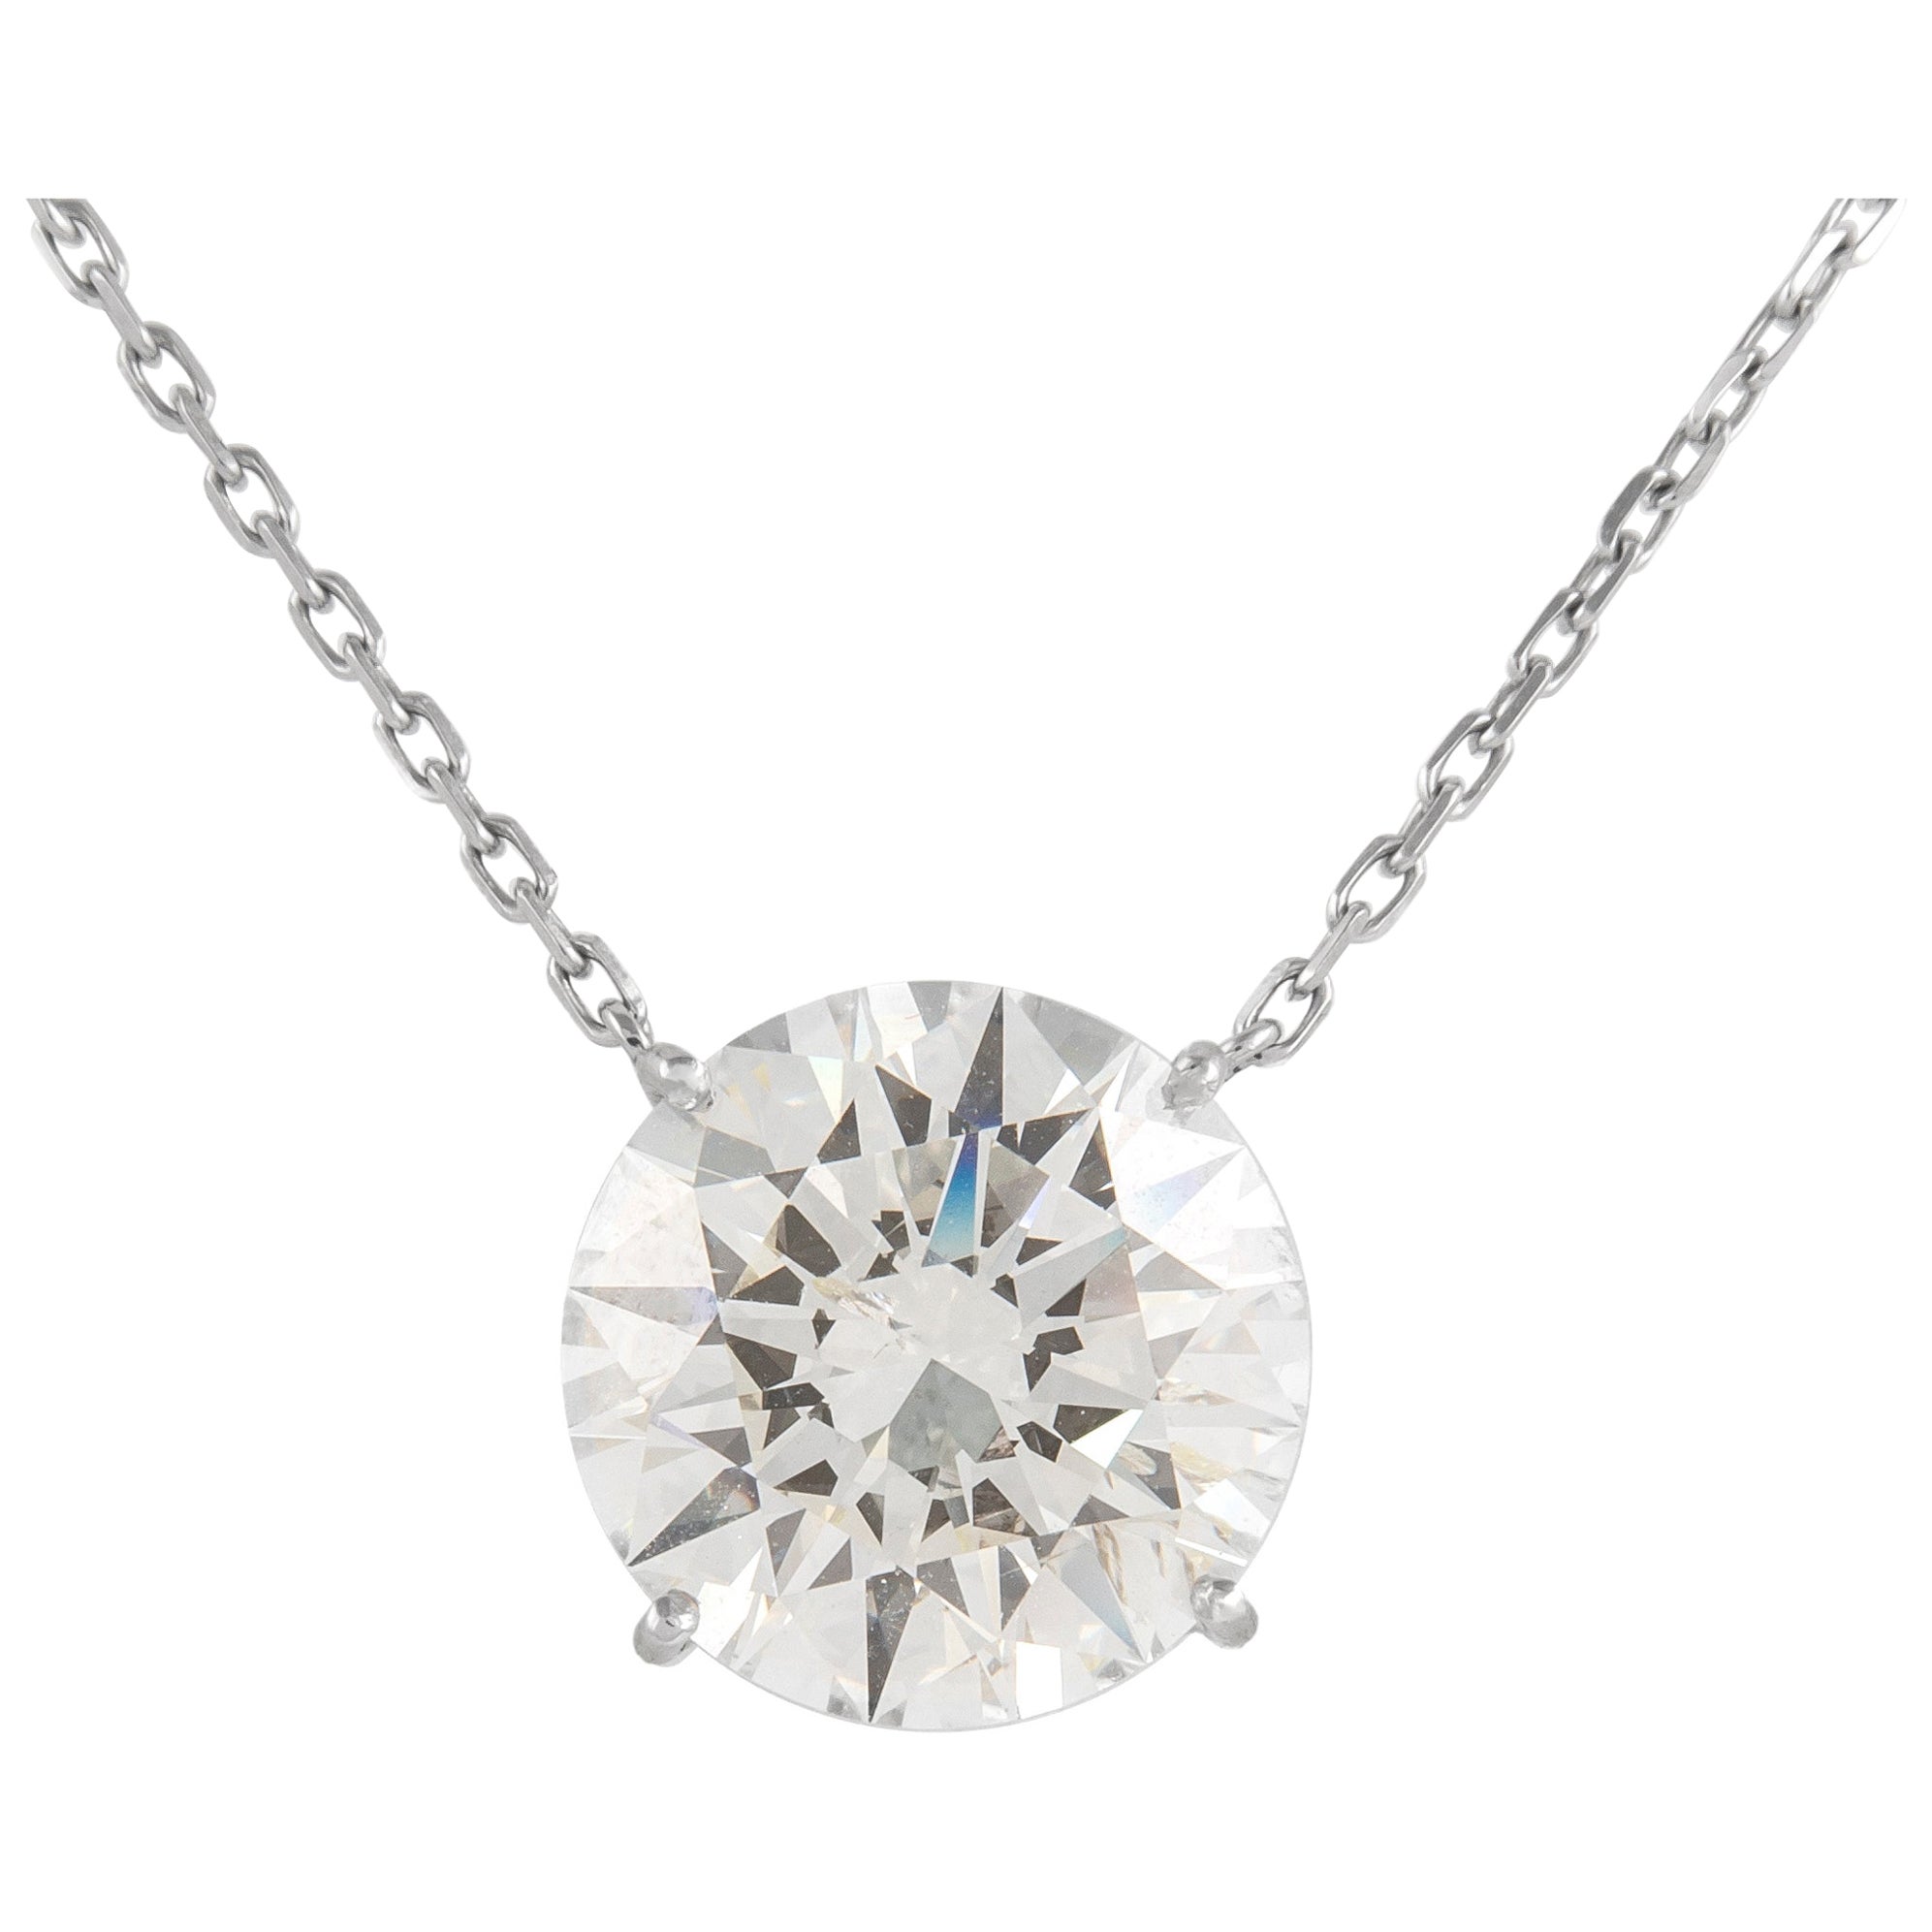 Alexander 8.43 Carats Diamond Solitaire Pendant Necklace 18k White Gold For Sale